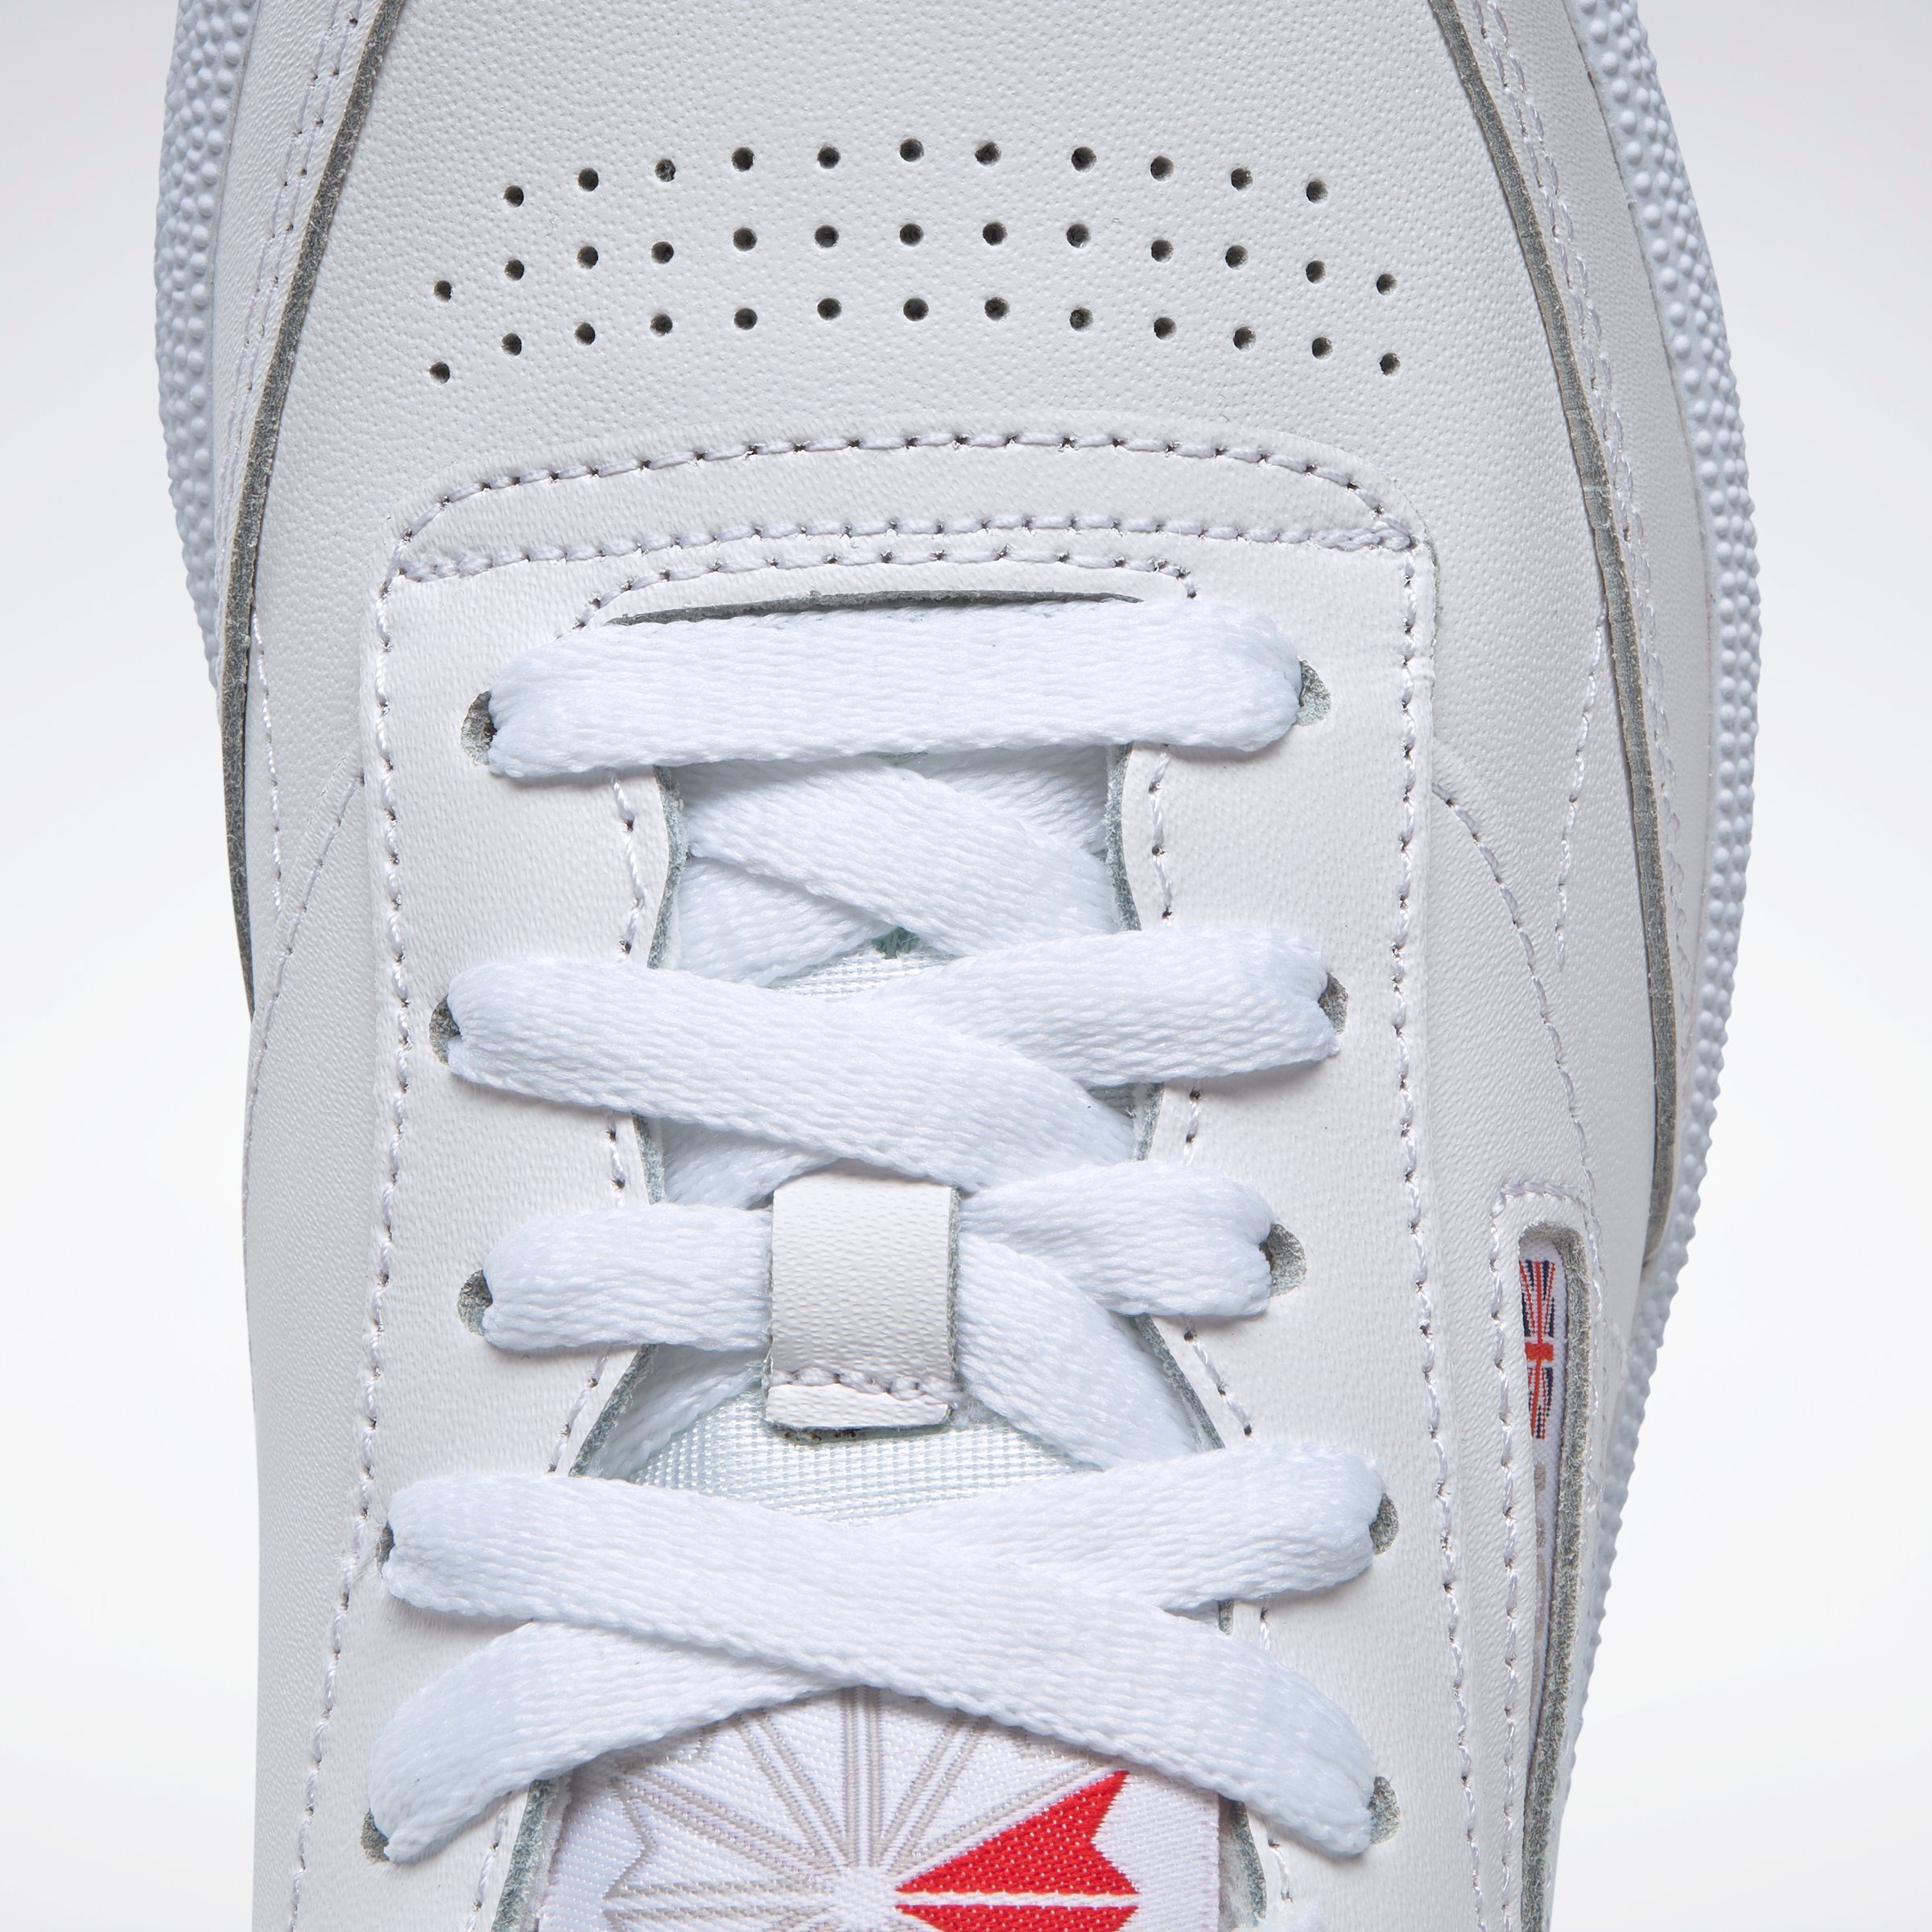 C WHITE-LIGHT-GREY-GUM 85 Classic CLUB Sneaker Reebok